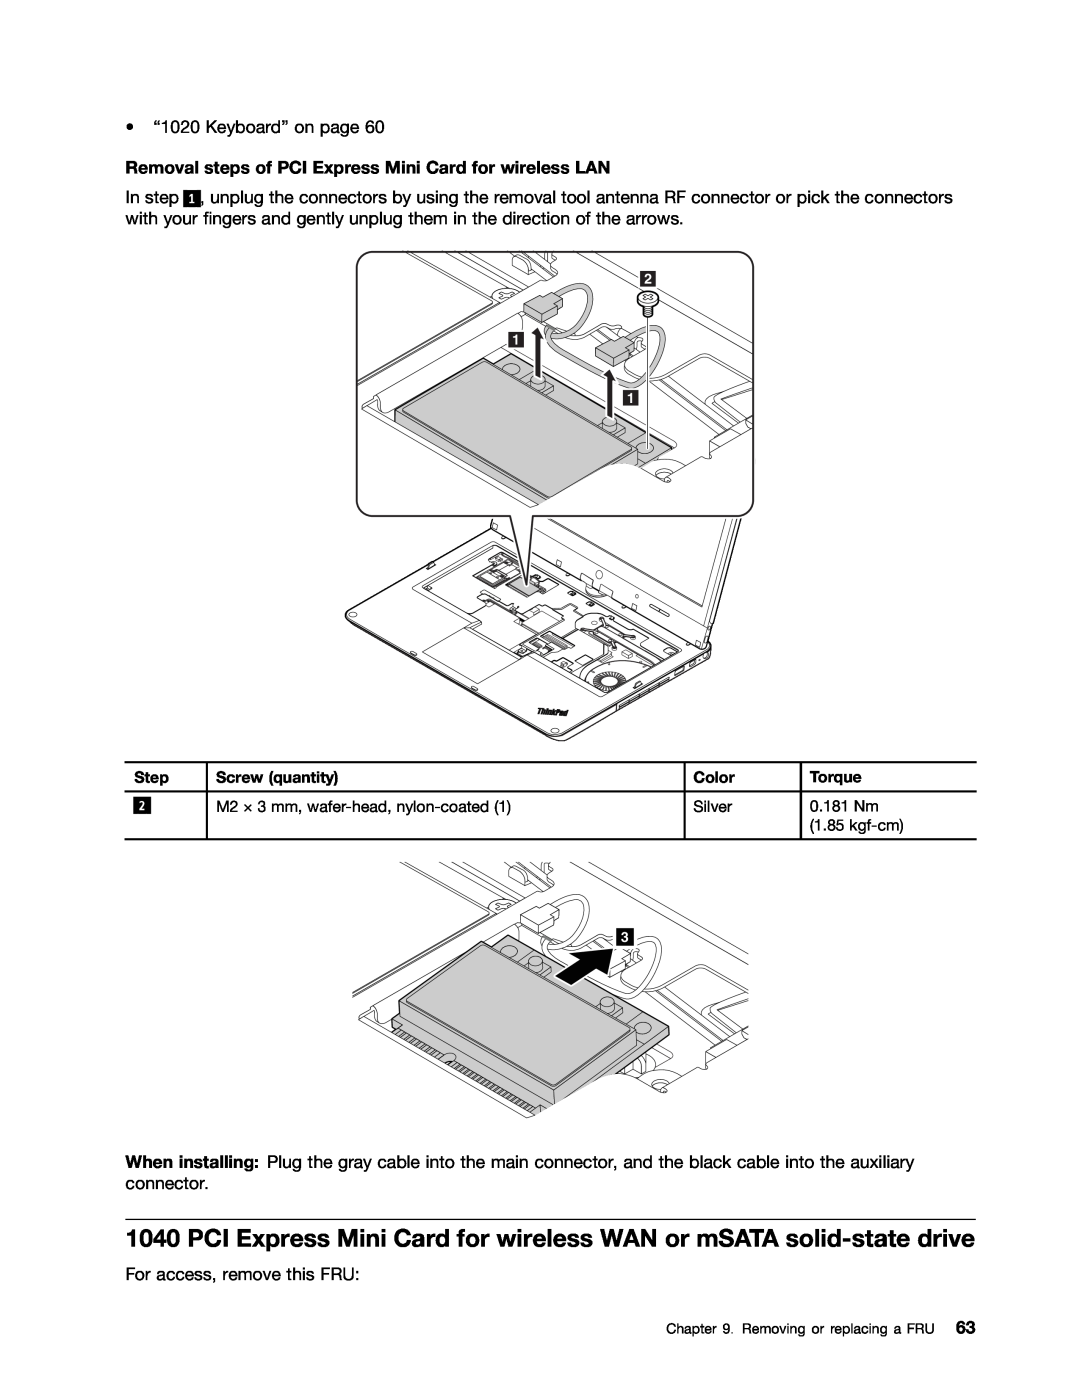 Lenovo 33472YU, S230U manual Removal steps of PCI Express Mini Card for wireless LAN 